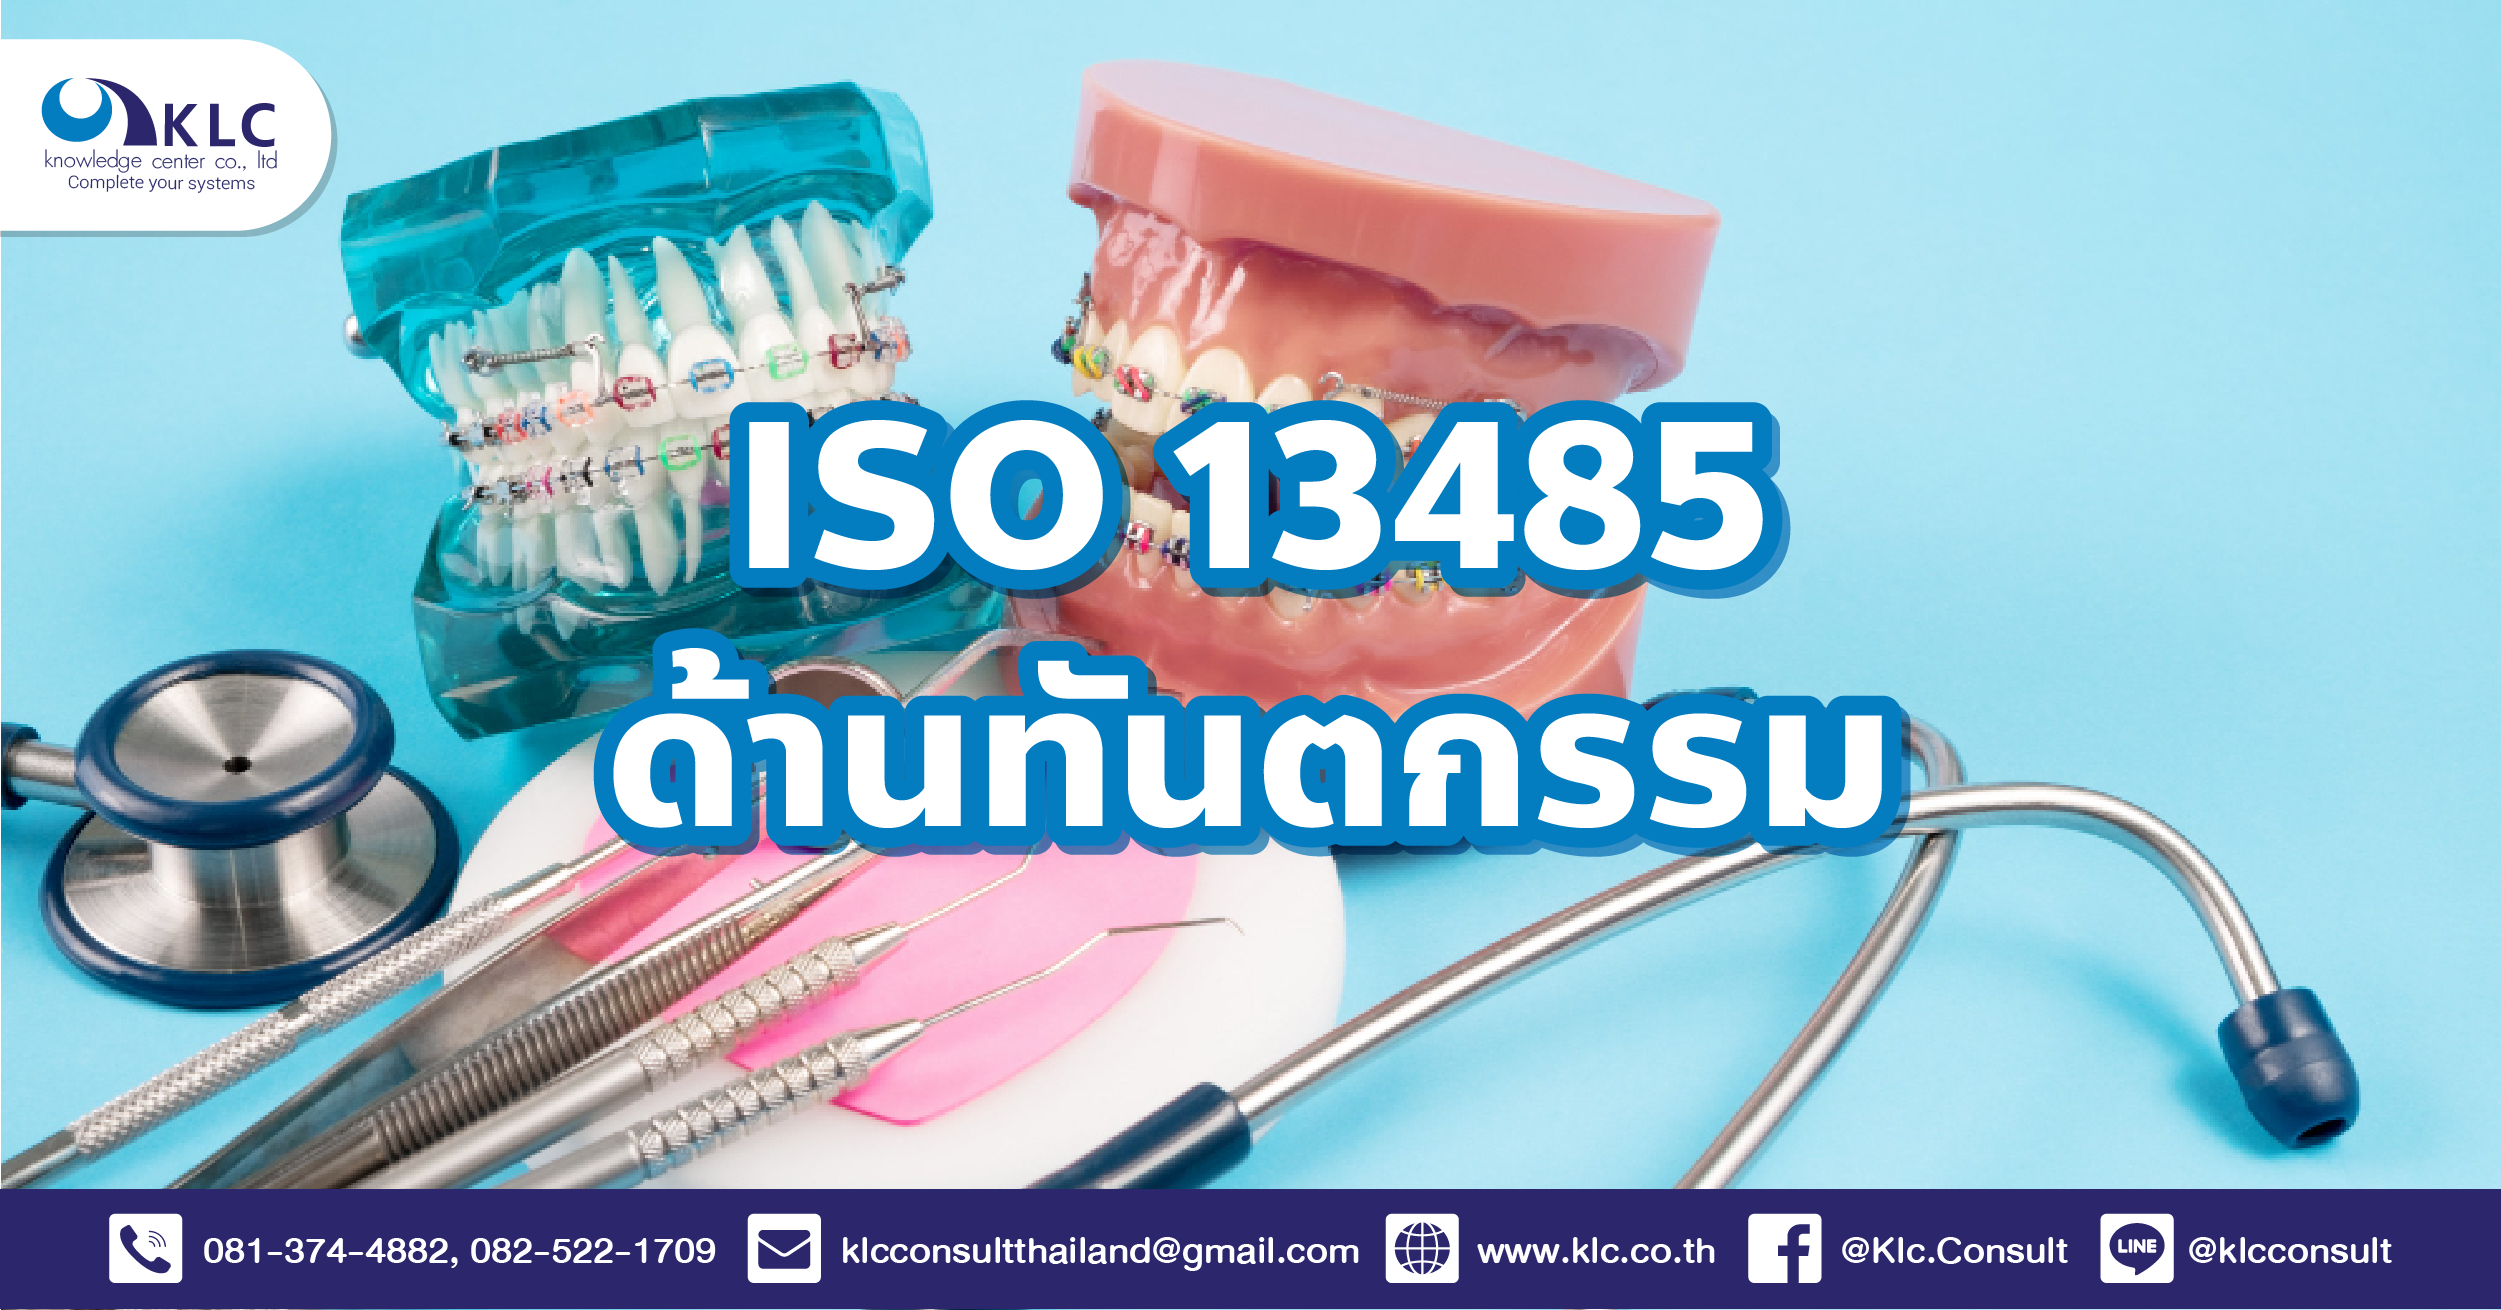 043_ISO 13485 Quality management system for dental medical equipment-01